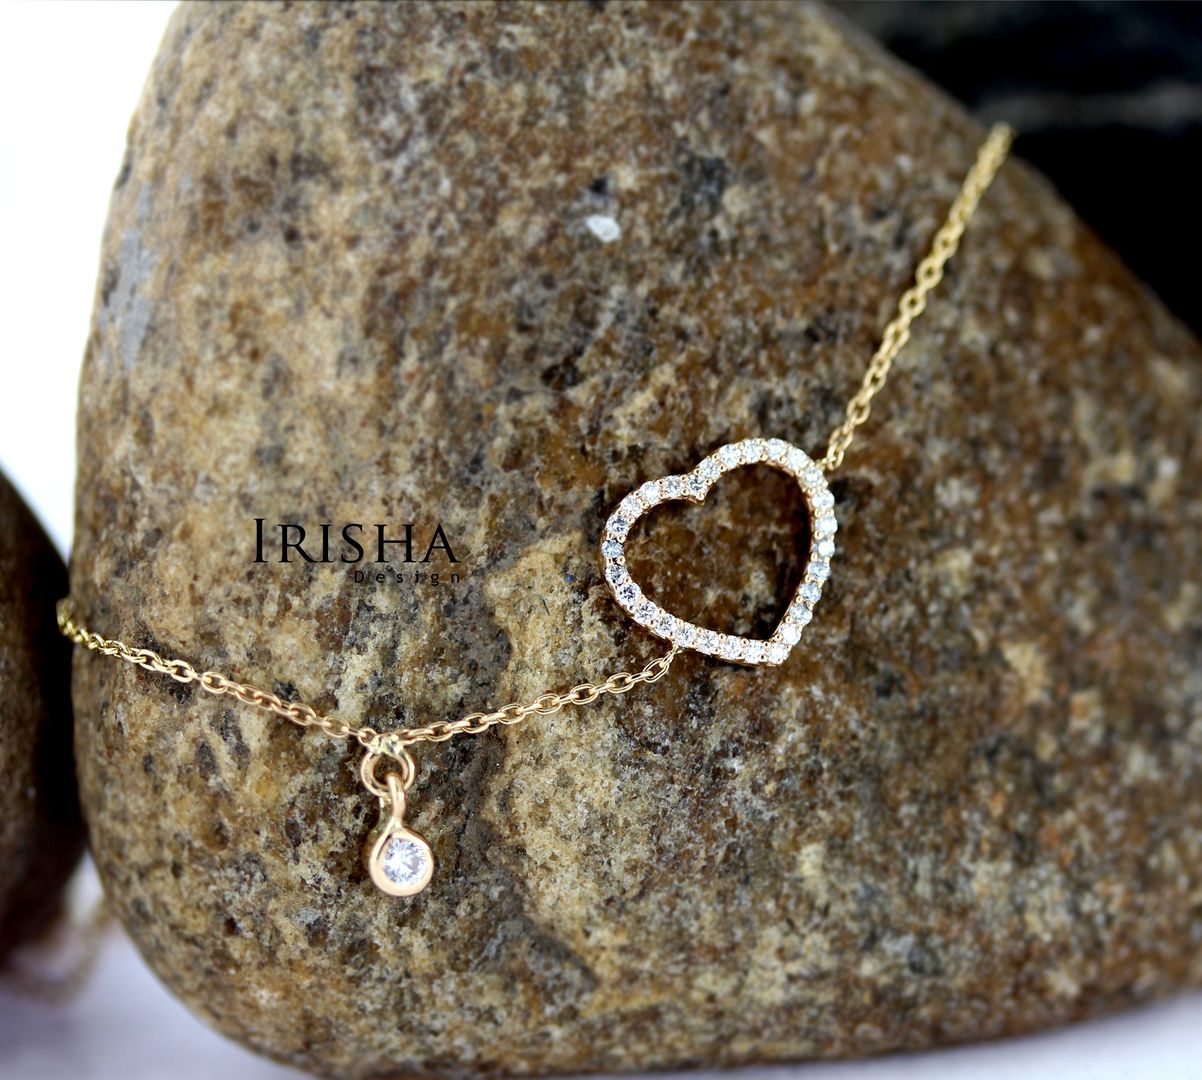 0.17 Ct. Genuine Diamonds VS Clarity Heart Chain Friendship Bracelet 14K Gold